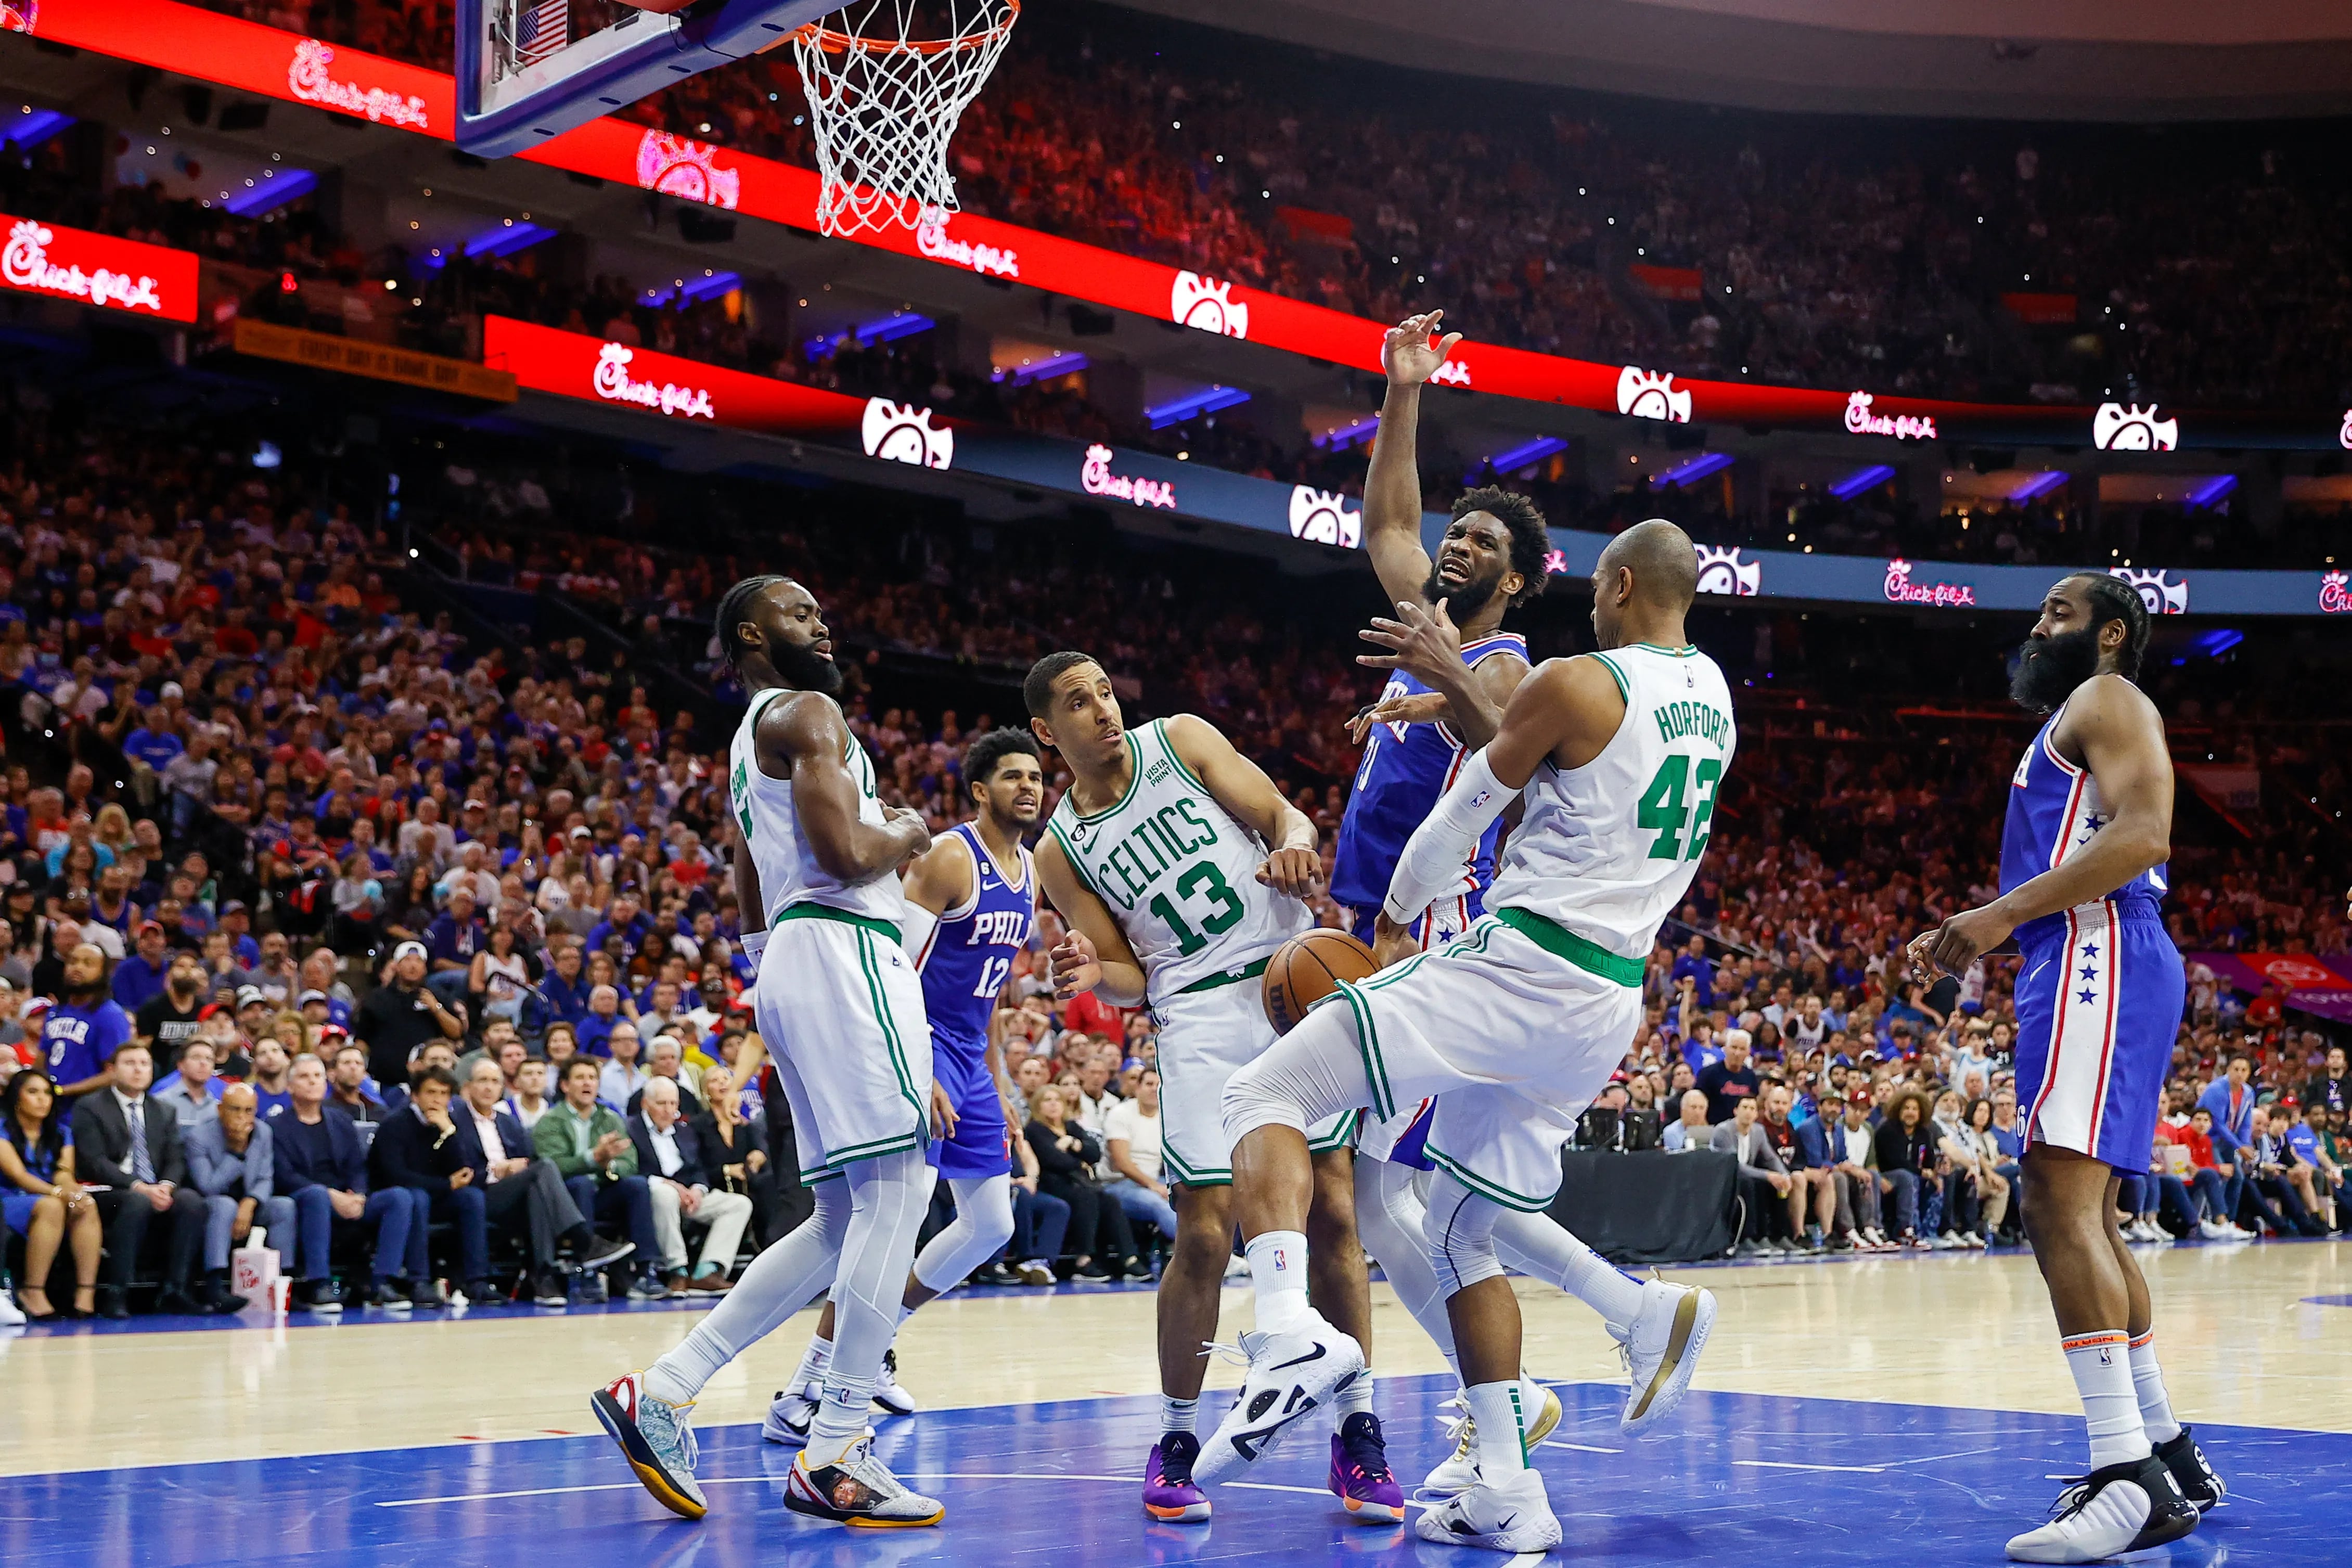 Philadelphia 76ers 115 vs 103 Boston Celtics summary: stats and highlights